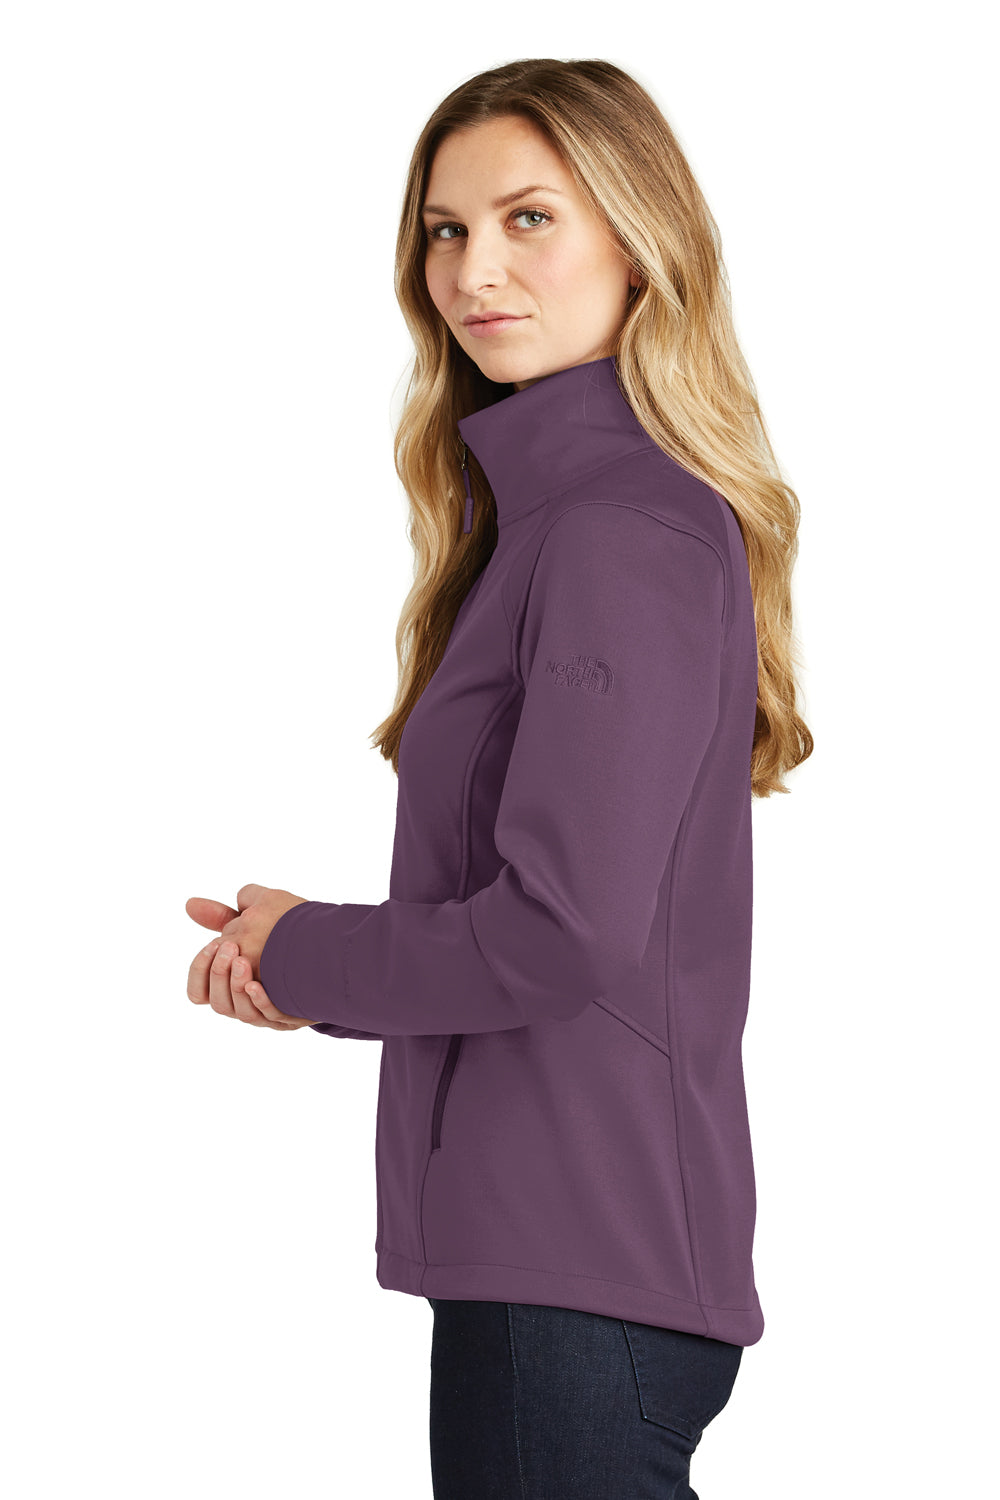 The North Face NF0A3LGY Womens Ridgeline Wind & Water Resistant Full Zip Jacket Blackberry Purple Side